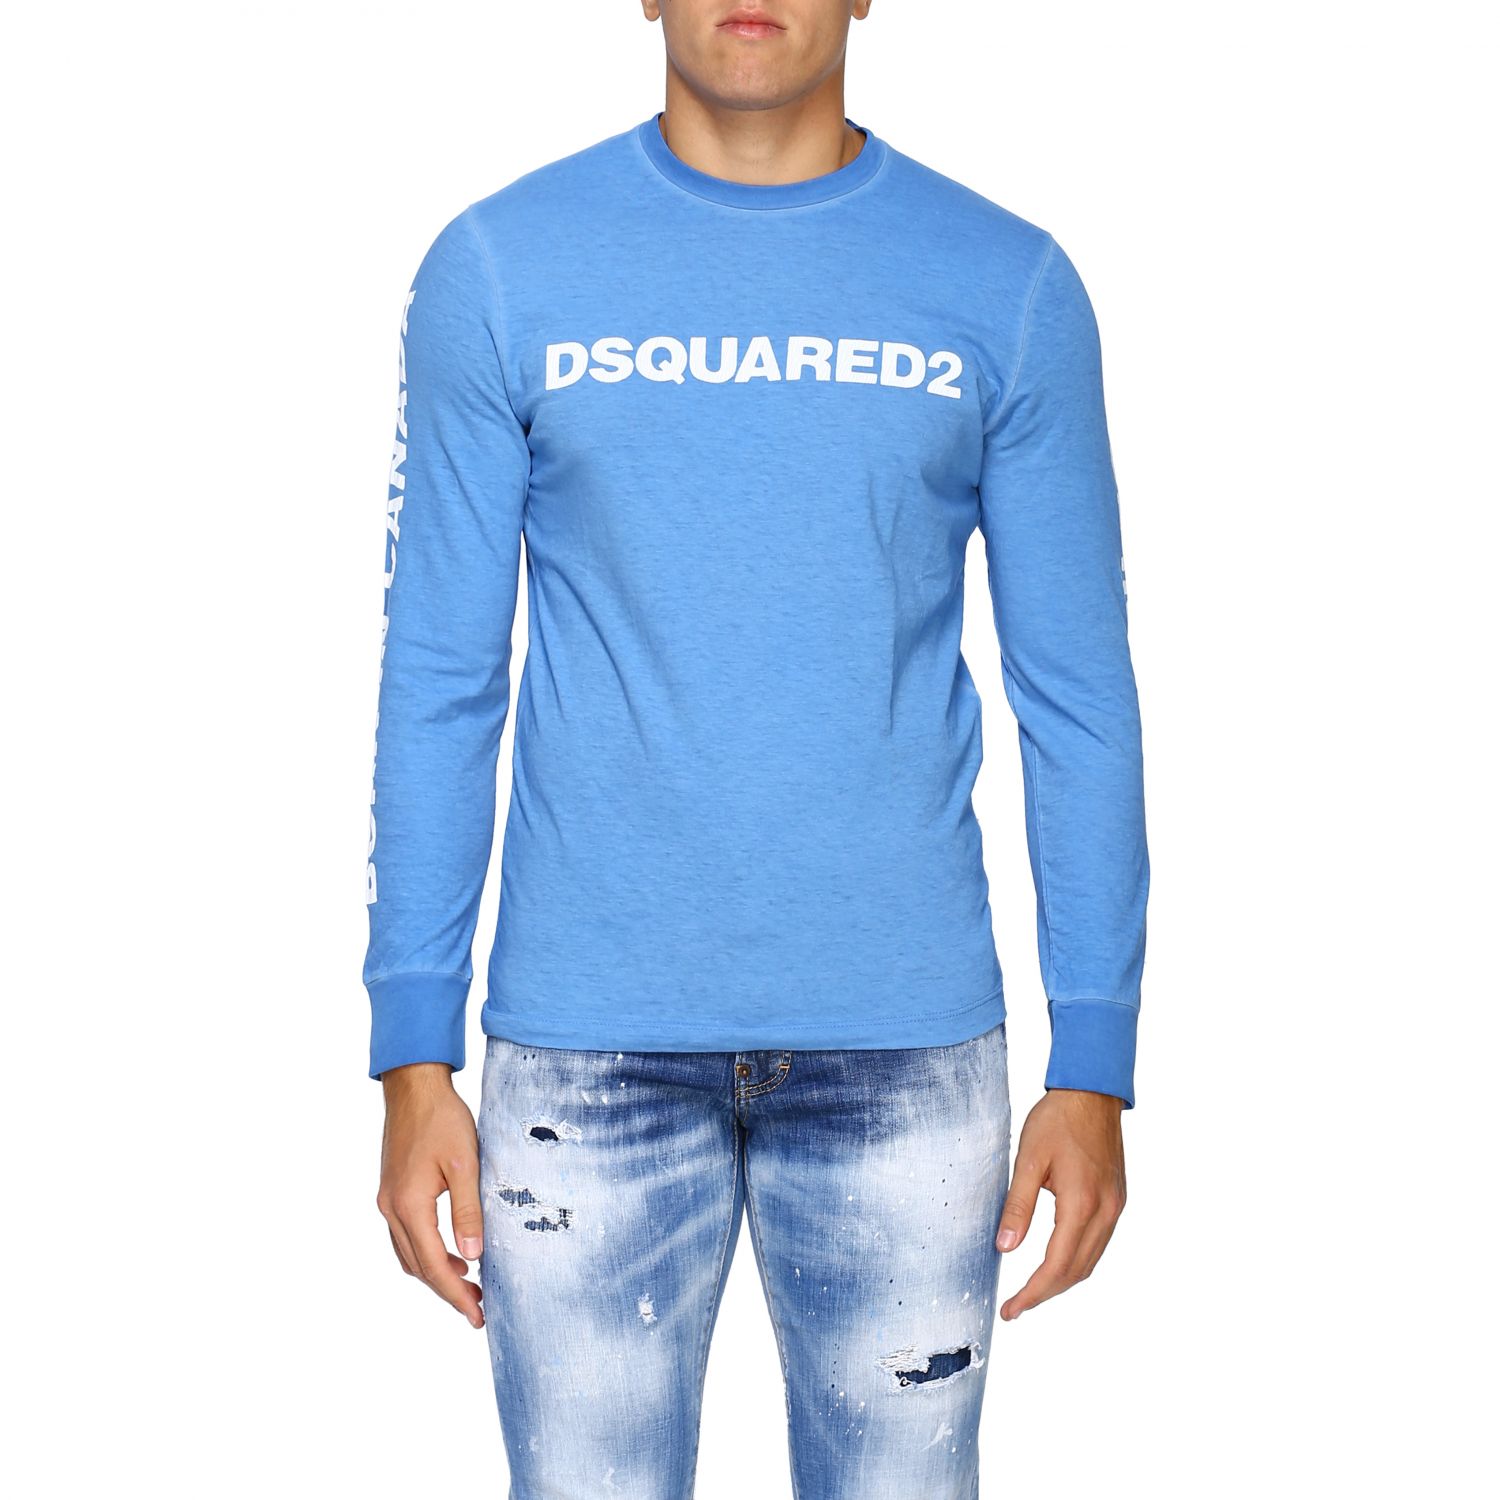 dsquared blue t shirt